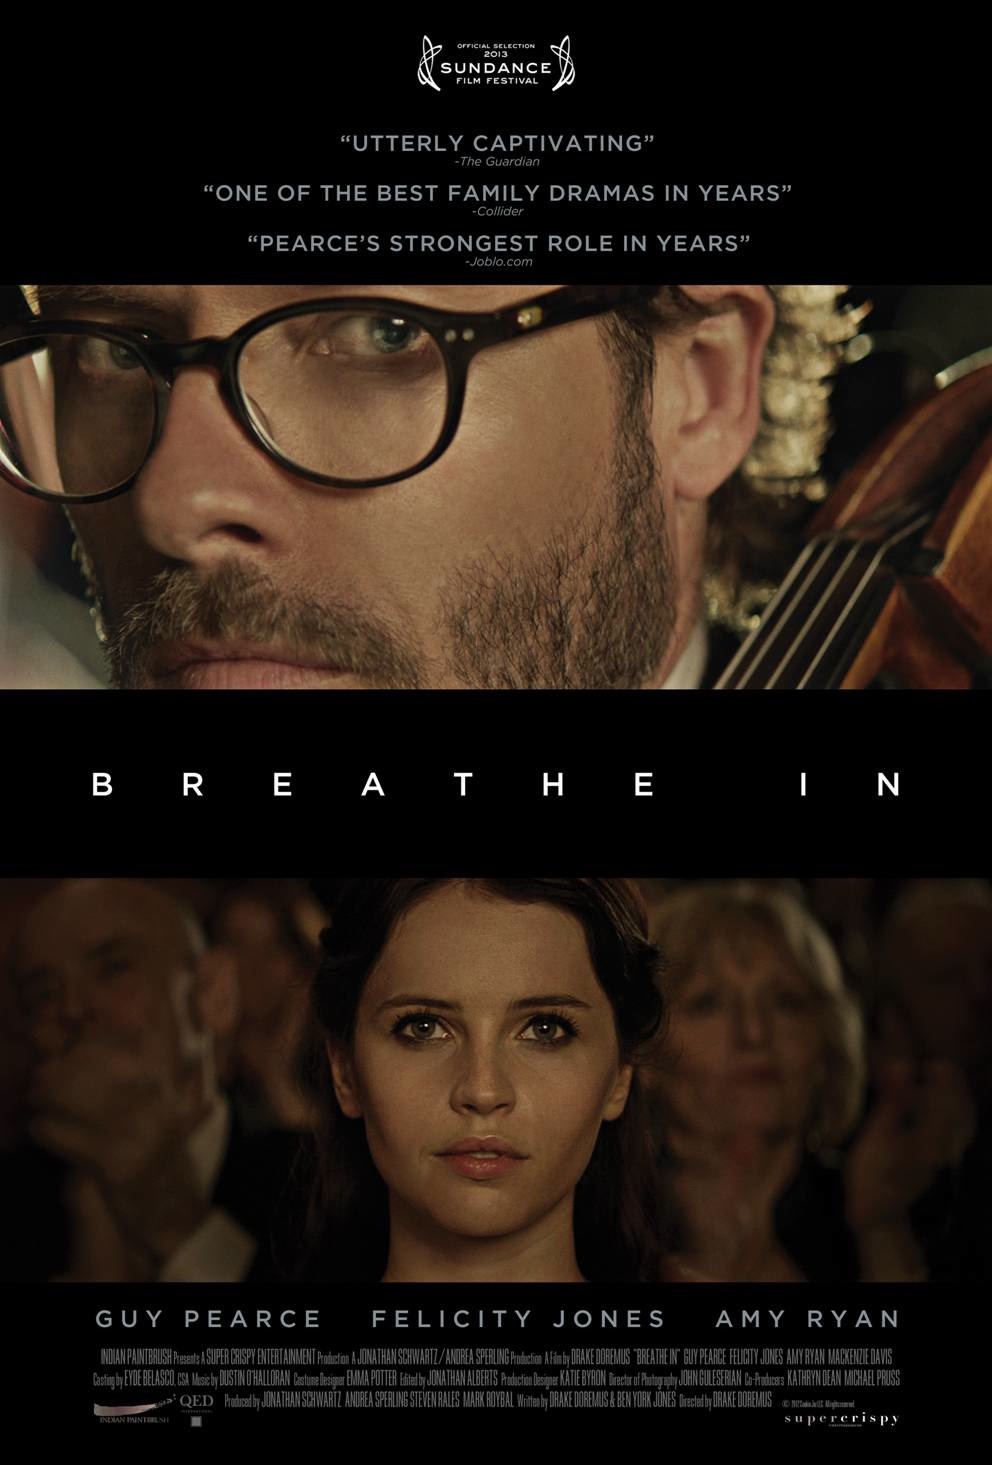 Guy Pearce and Felicity Jones in Breathe In (2013)